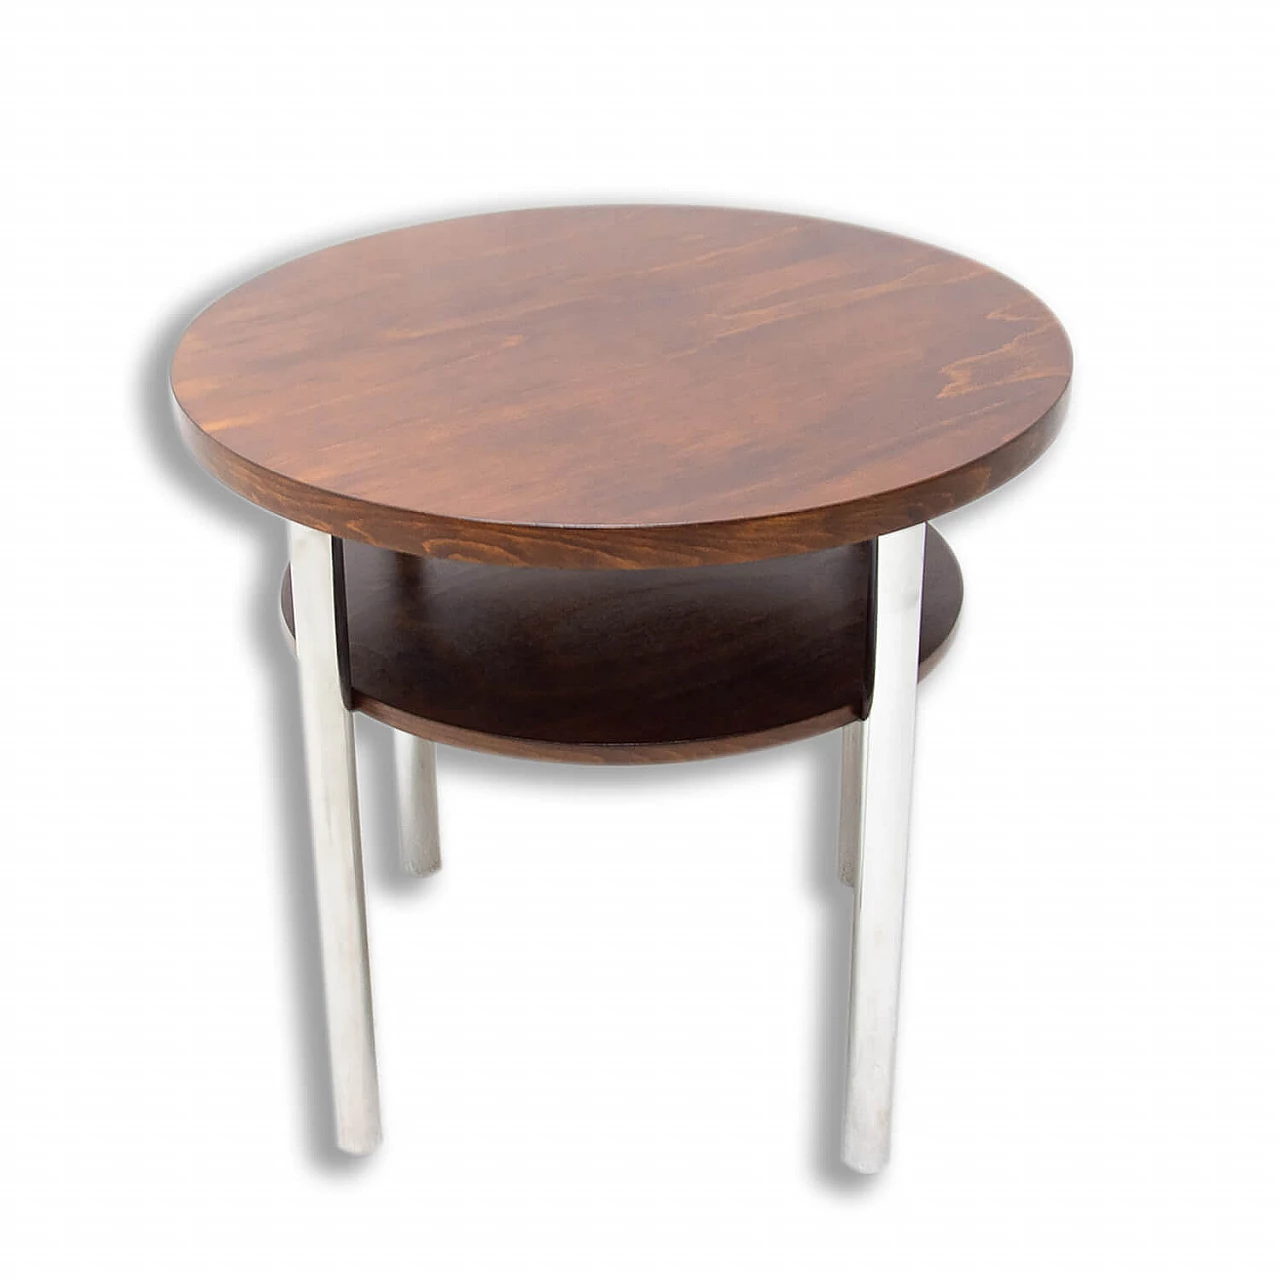 Chromed Bauhaus coffee table by Robert Slezak, 1930s 1324659